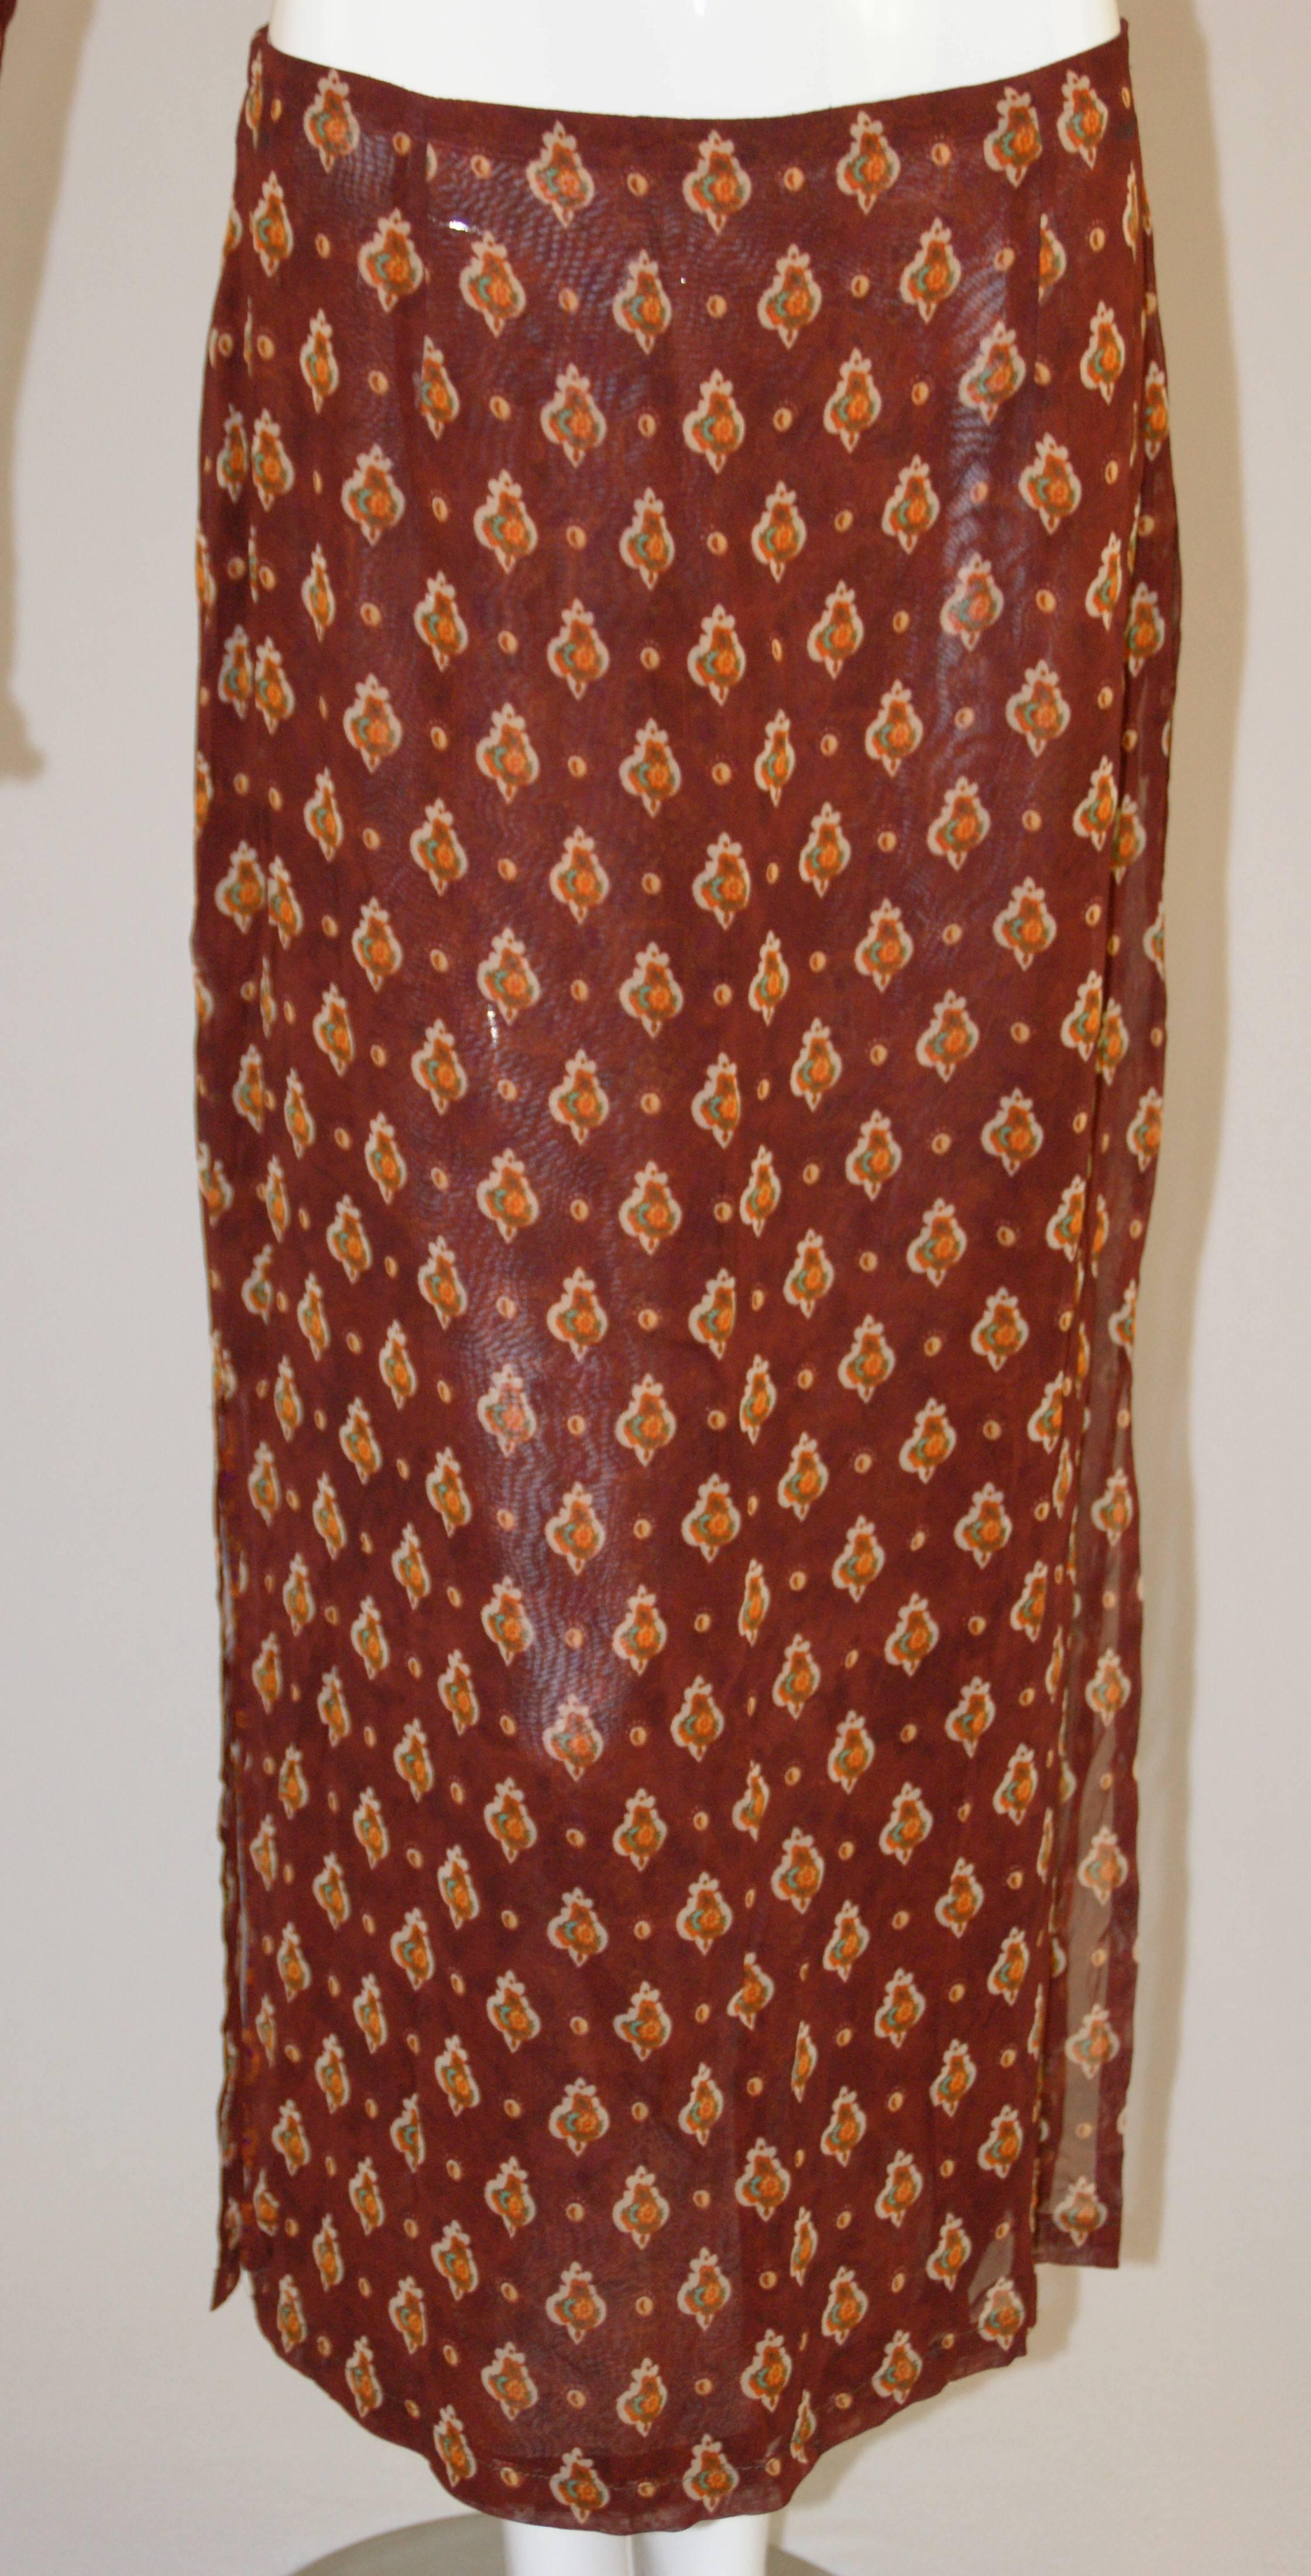 Brown S/S 1994 Runway Dolce & Gabbana Gypsy Fringe Crop Top & Skirt Ensemble Suit 